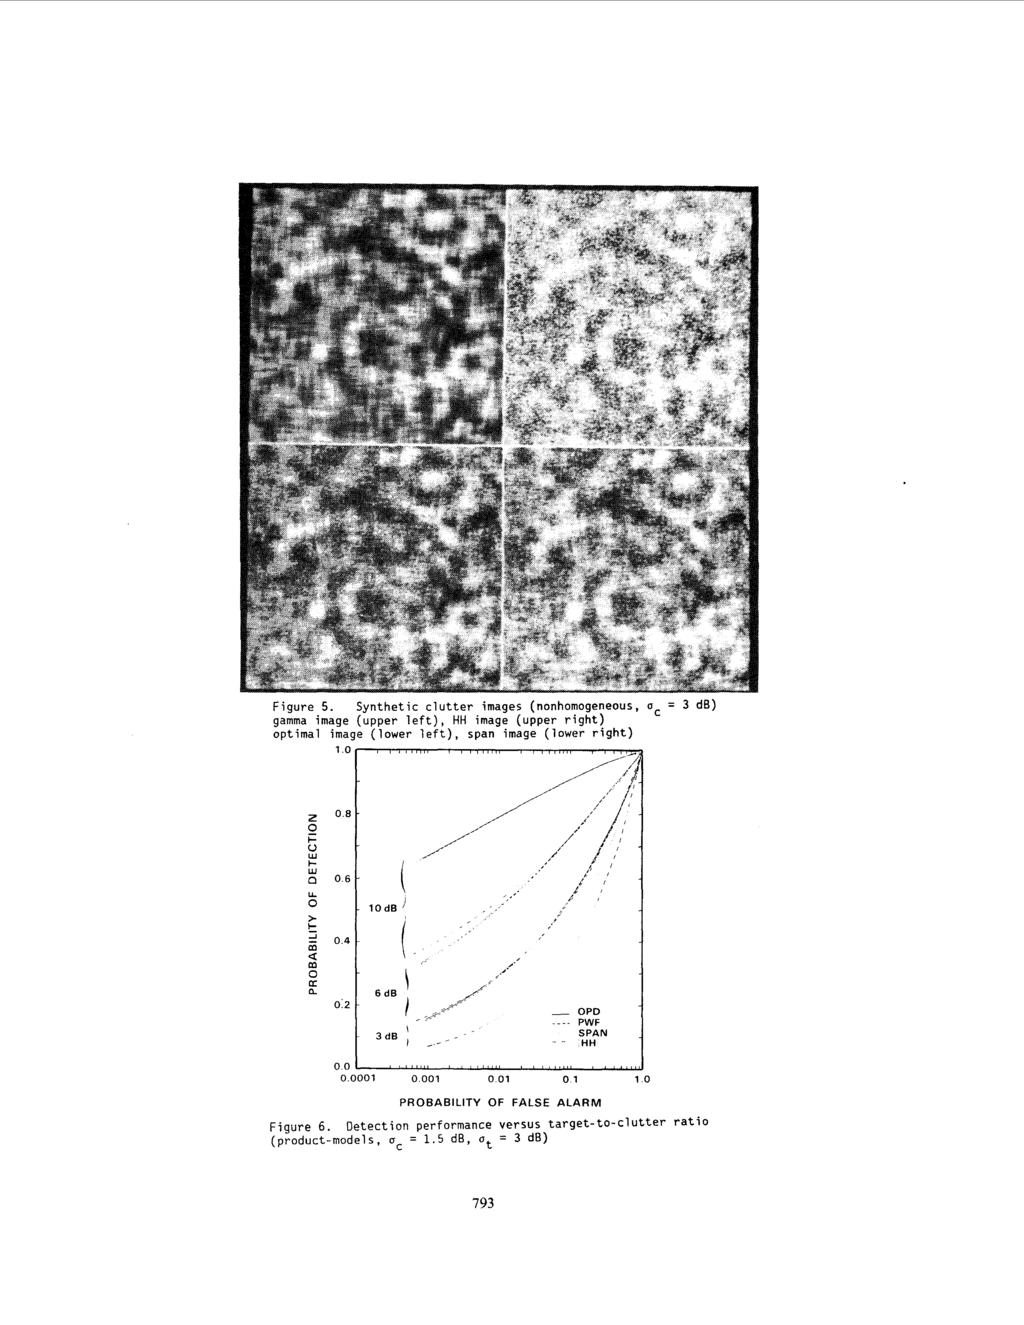 Figure 5. Synthetic clutter images (nonhomogeneous, uc = 3 db) qamma imaqe (upper left), HH image (upper right) optimal image (lower left), span-image (lower right) 1.o z 0 t- 2 c w a U 0 > t =!